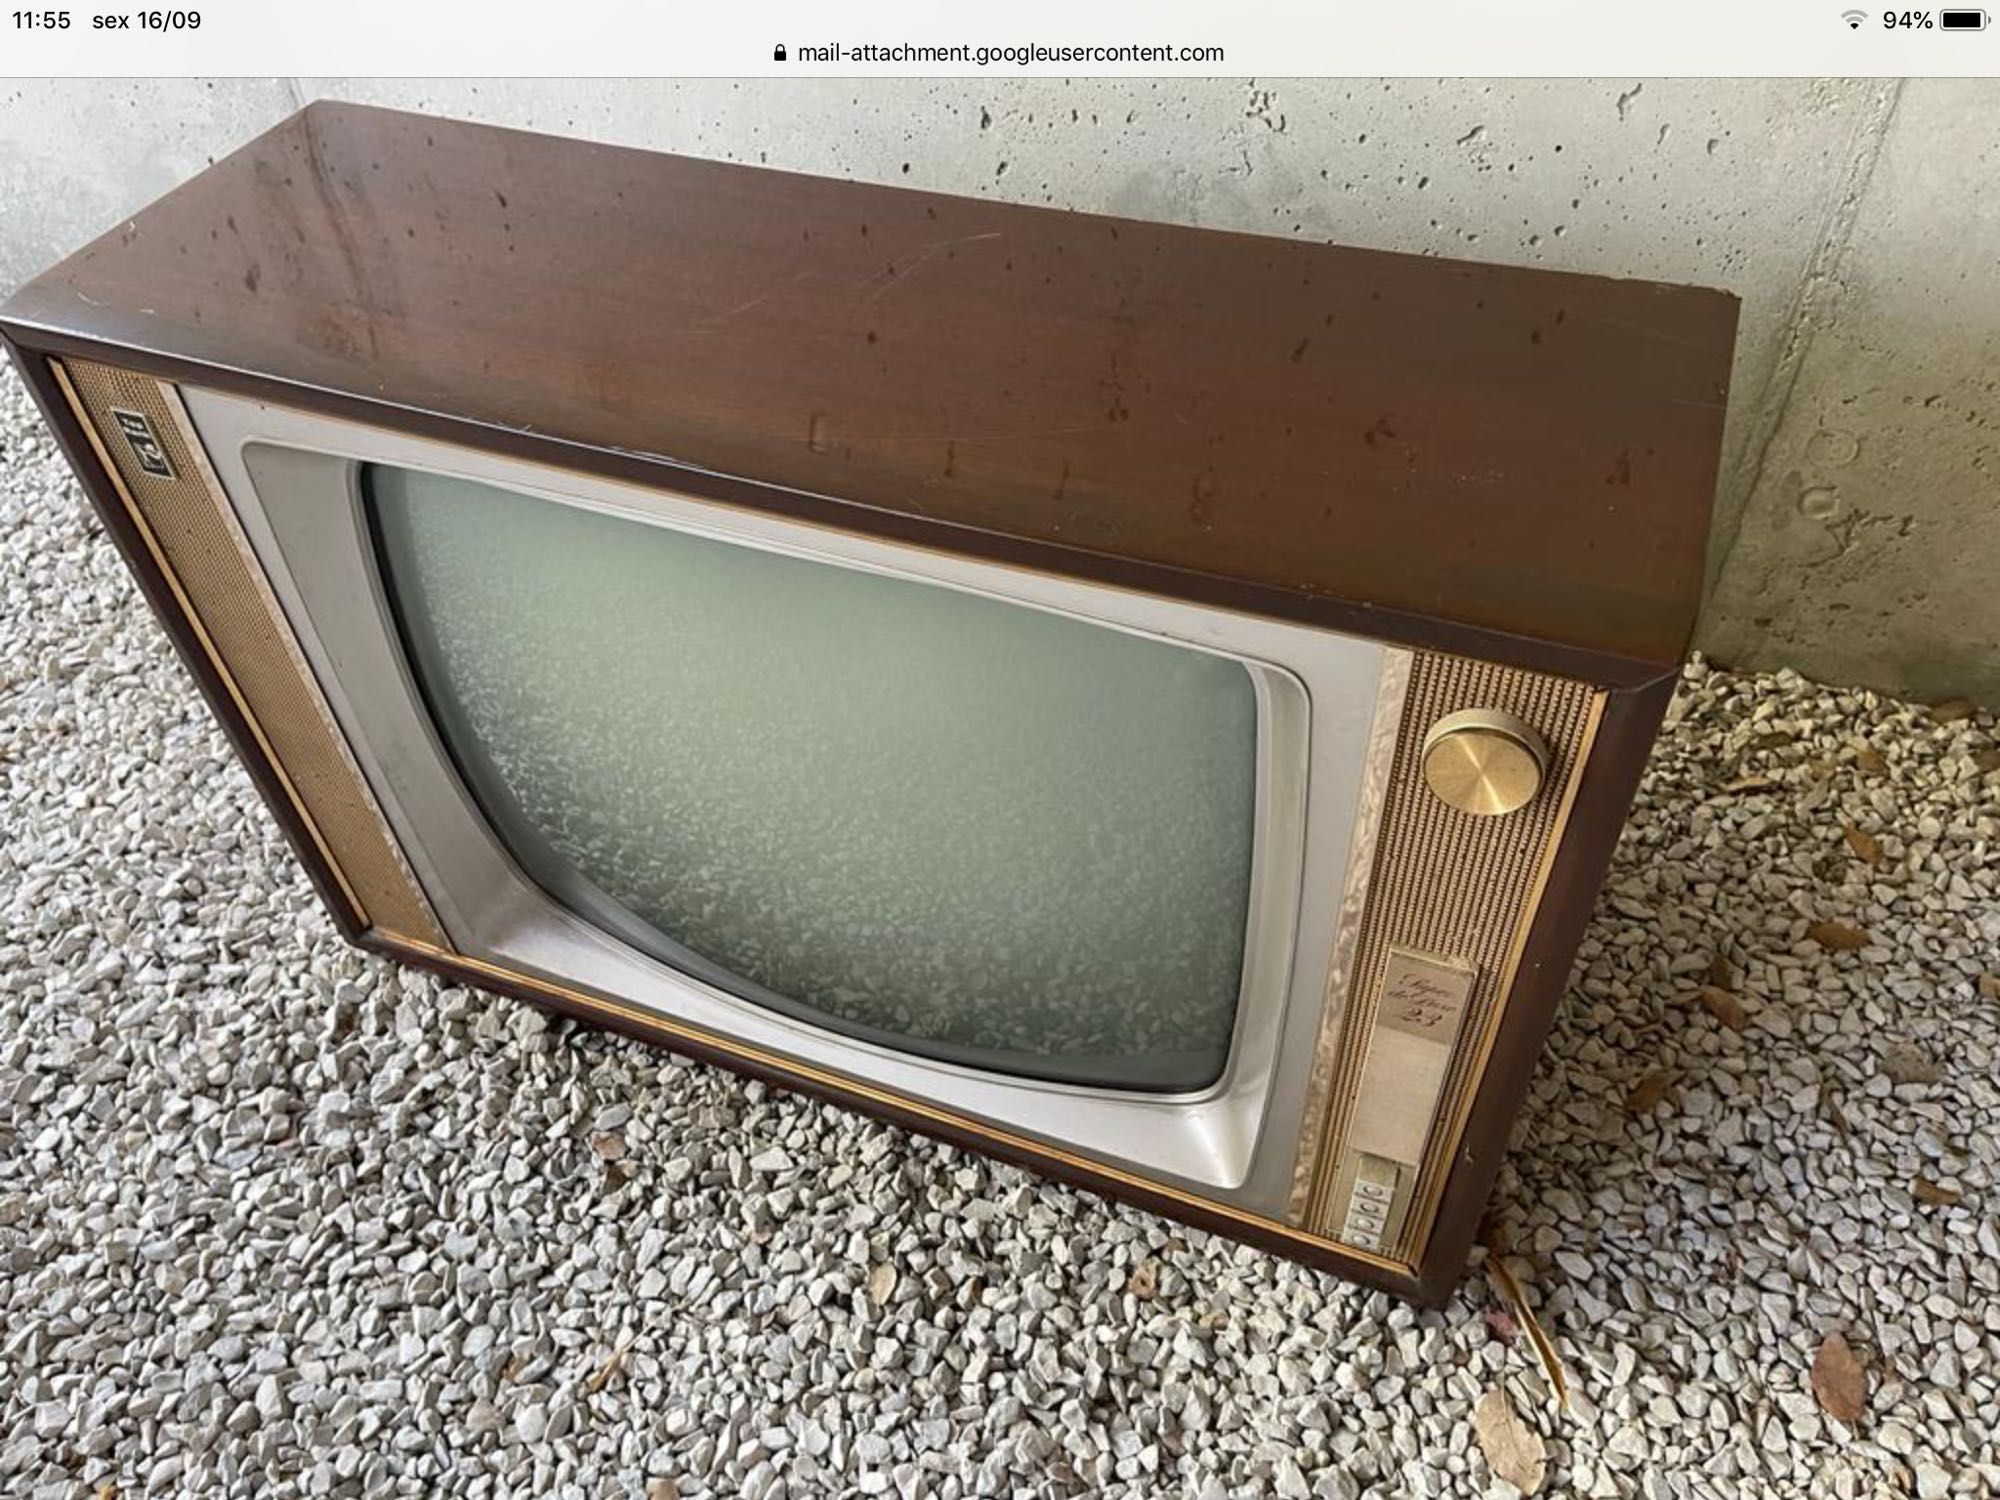 Tv Vintage a preto e branco